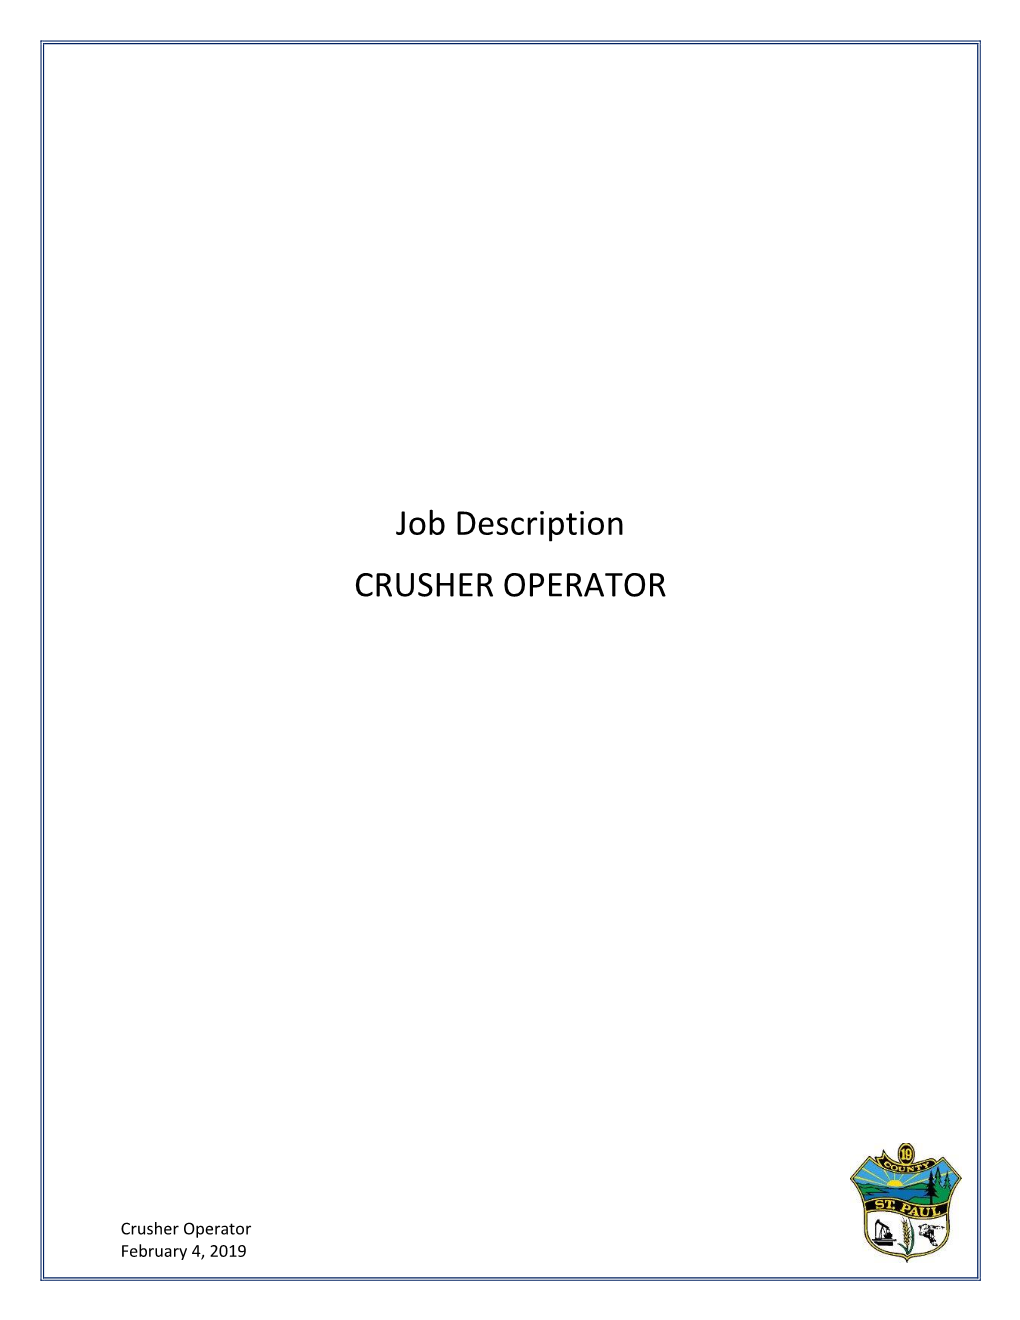 Job Description CRUSHER OPERATOR